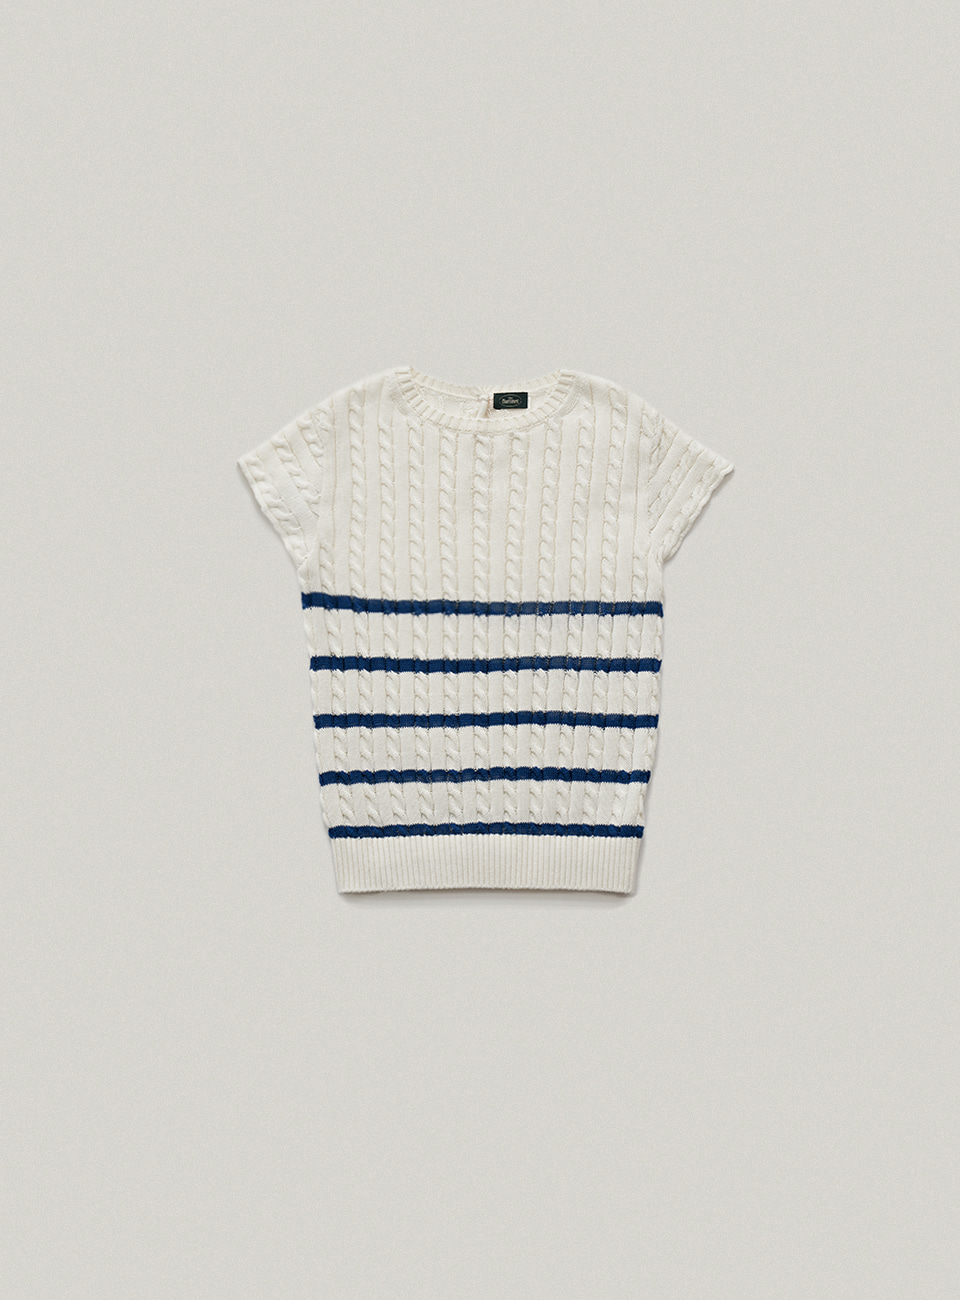 White Breton Knit Sweater[7월 초 순차 배송]